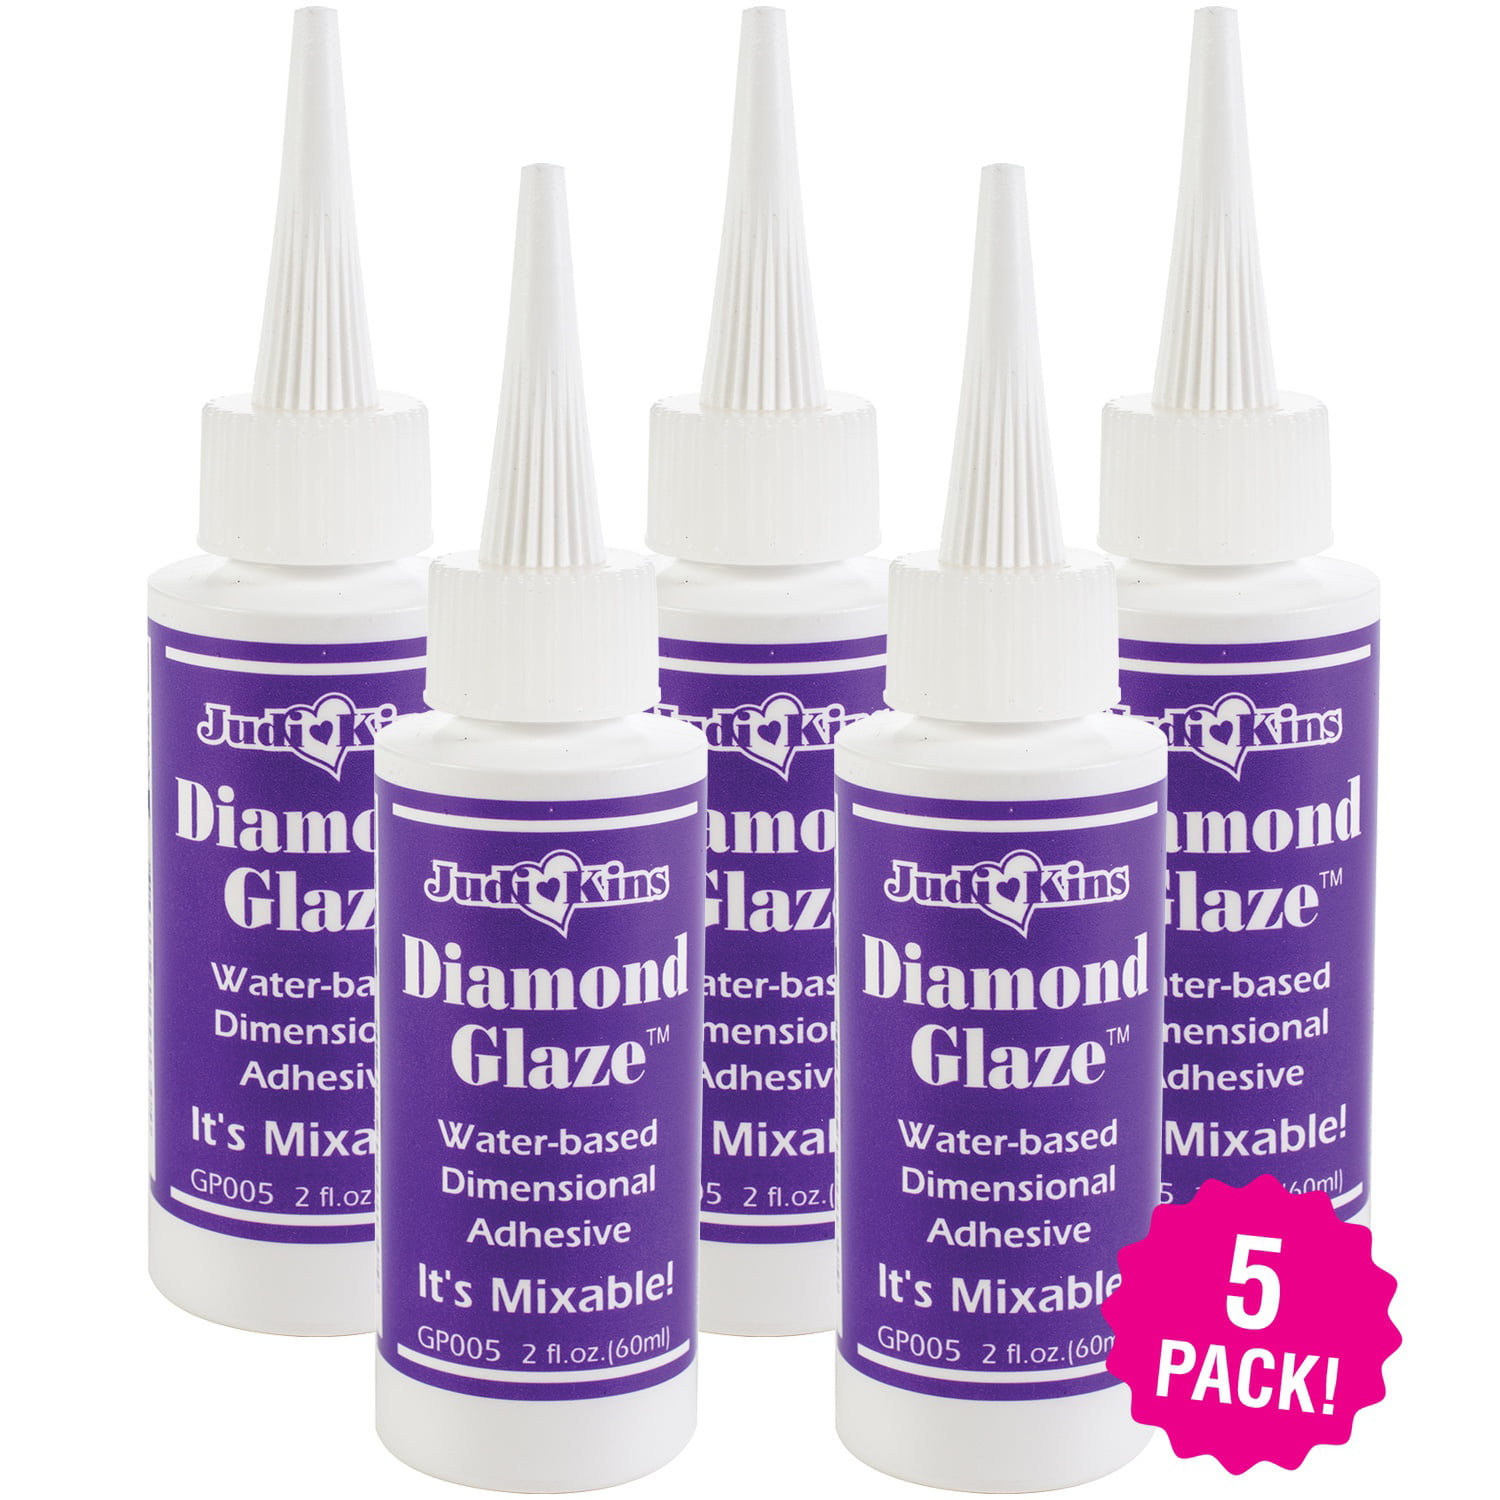 Judikins Diamond Glaze Dimensional Adhesive 2oz 5/Pkg, 5 Pack